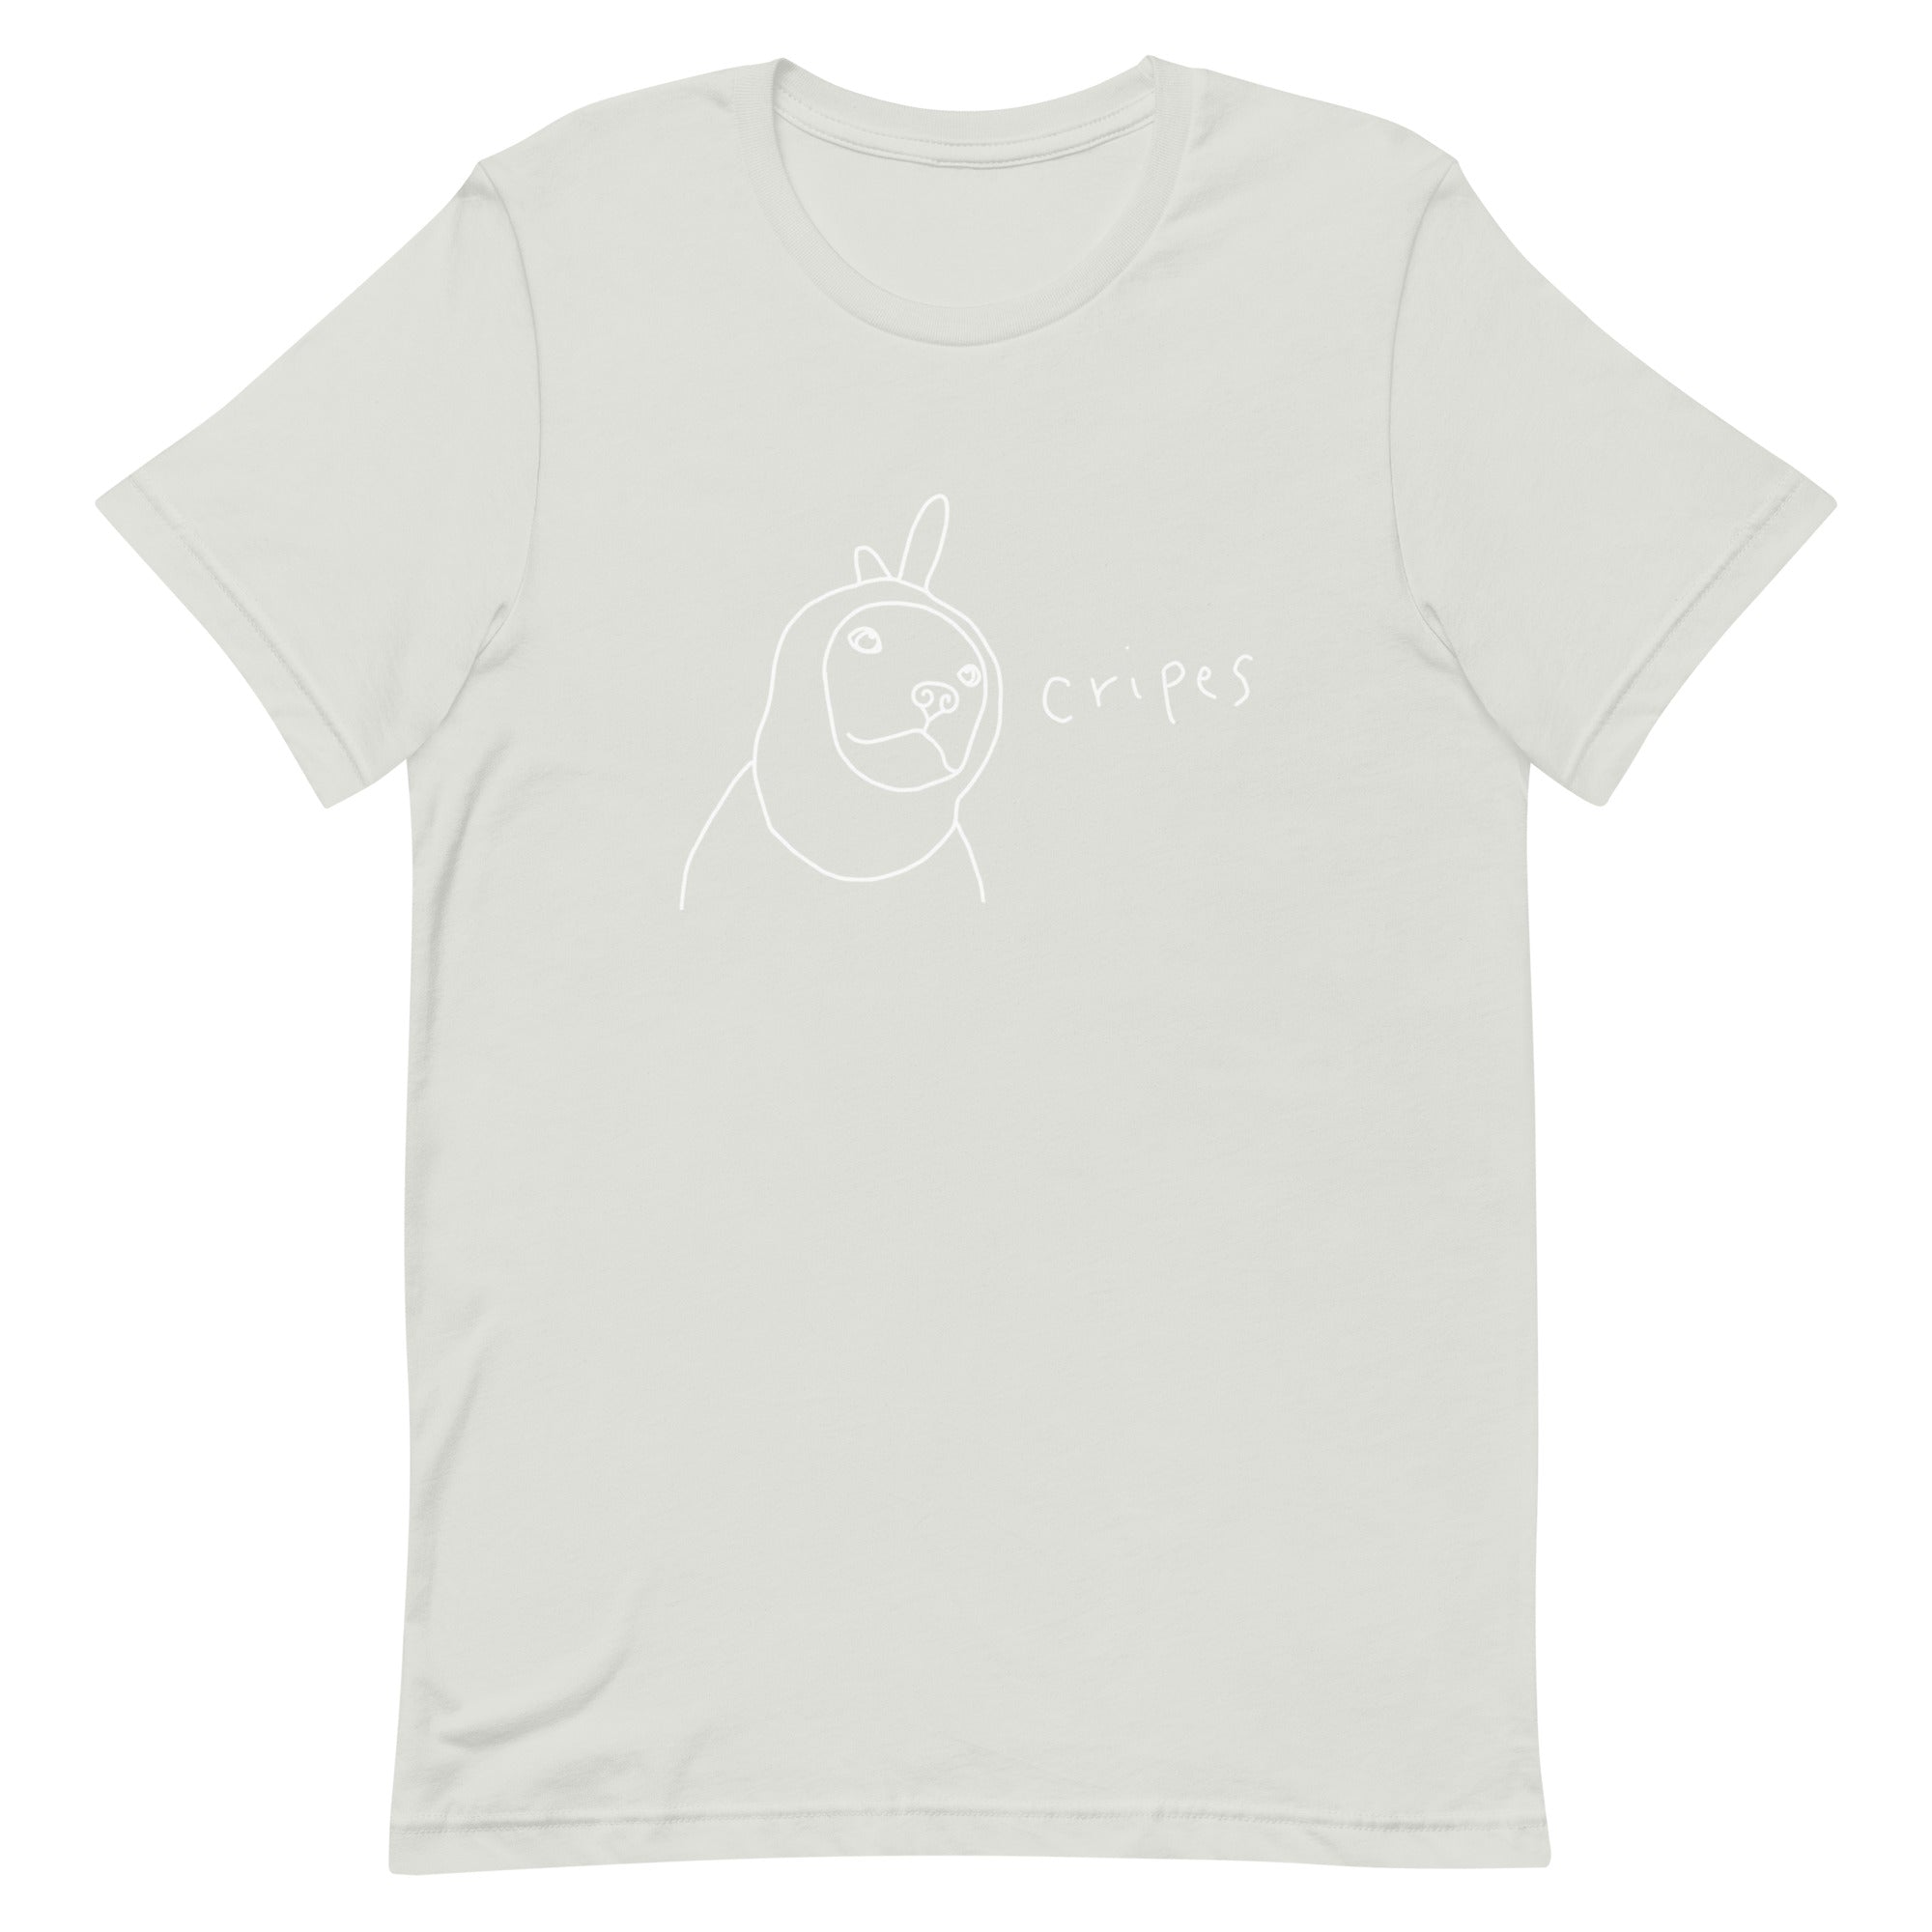 "Cripes" Adult Unisex t-shirt White Print